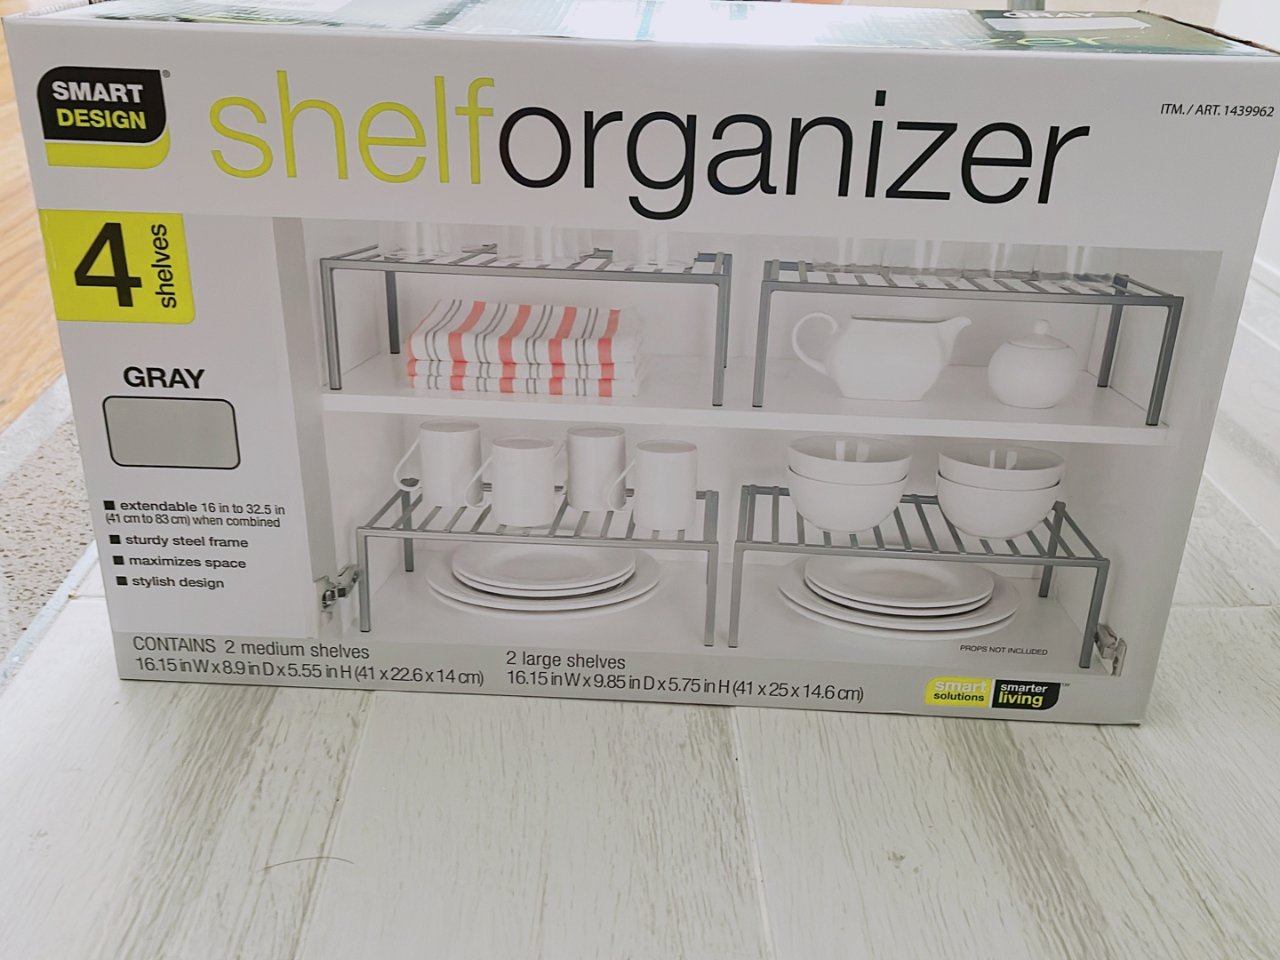 Shelf organizer